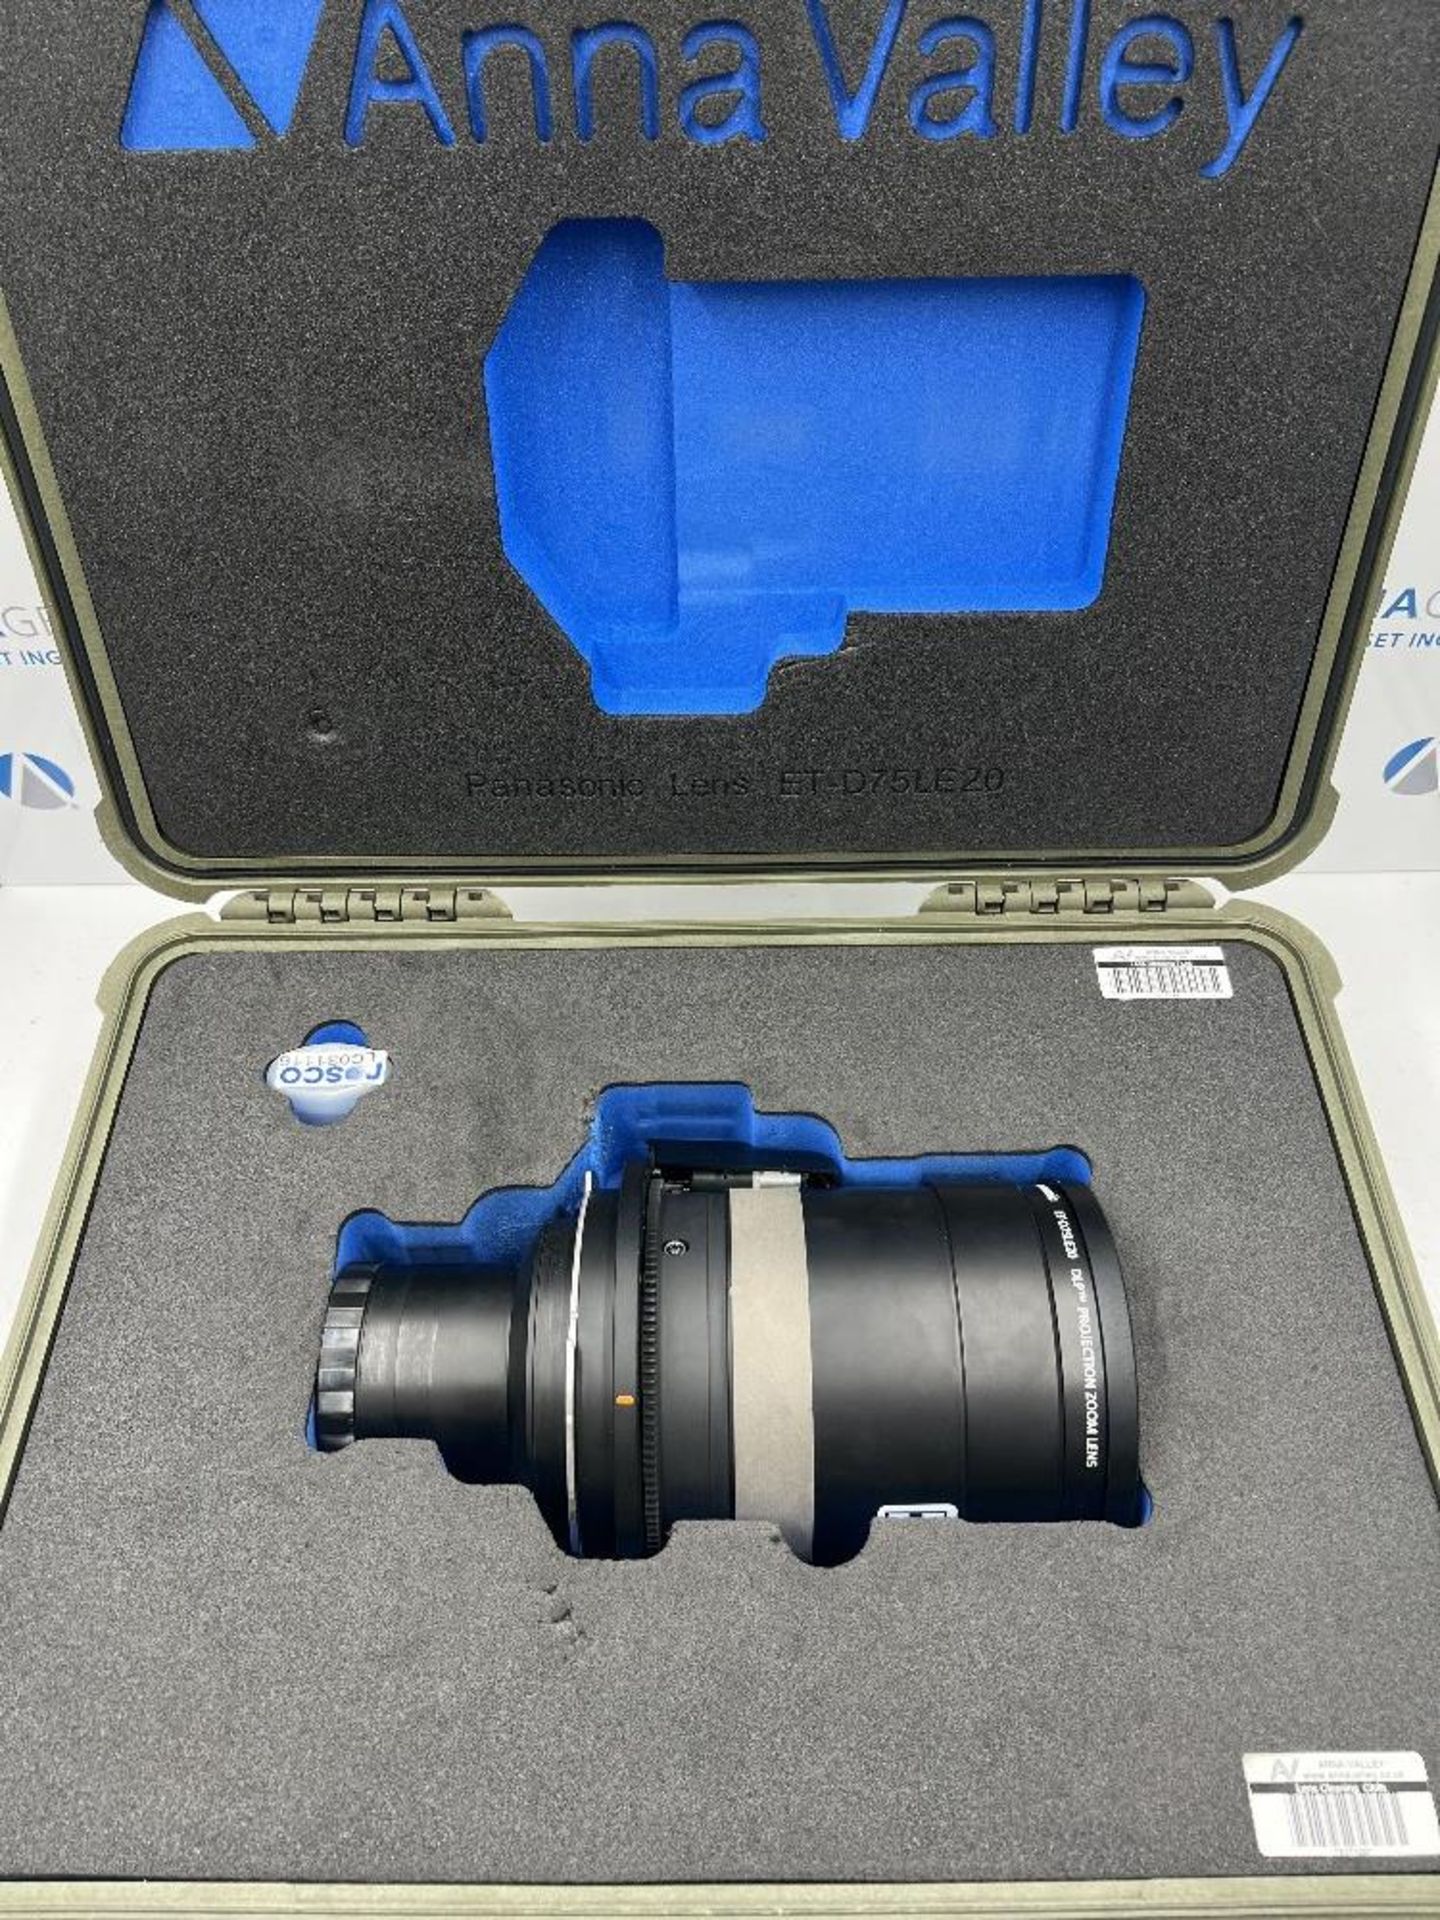 Panasonic ET-D75LE20 1.7-2.4 Zoom Lens With Carrier Case - Image 9 of 10